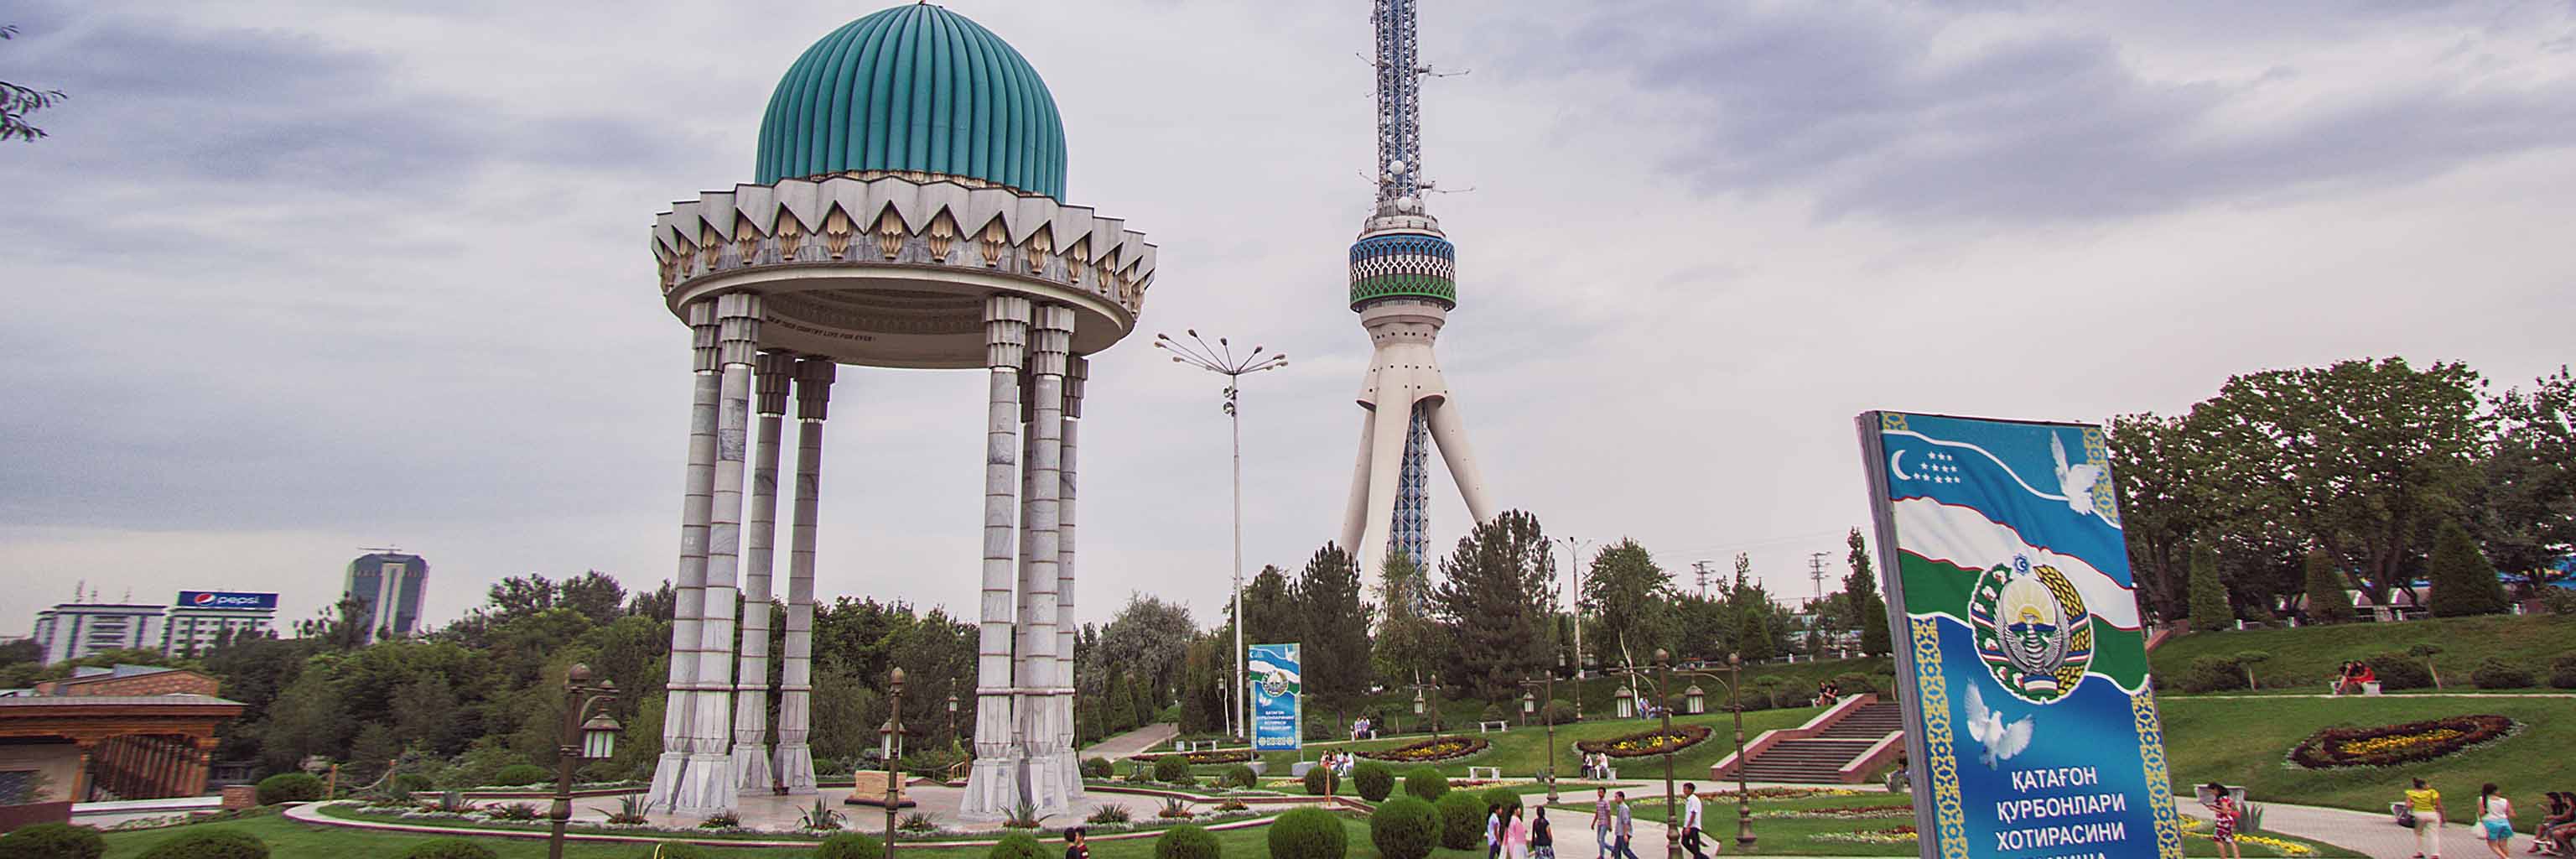 Park in Tashkent, Uzbekistan